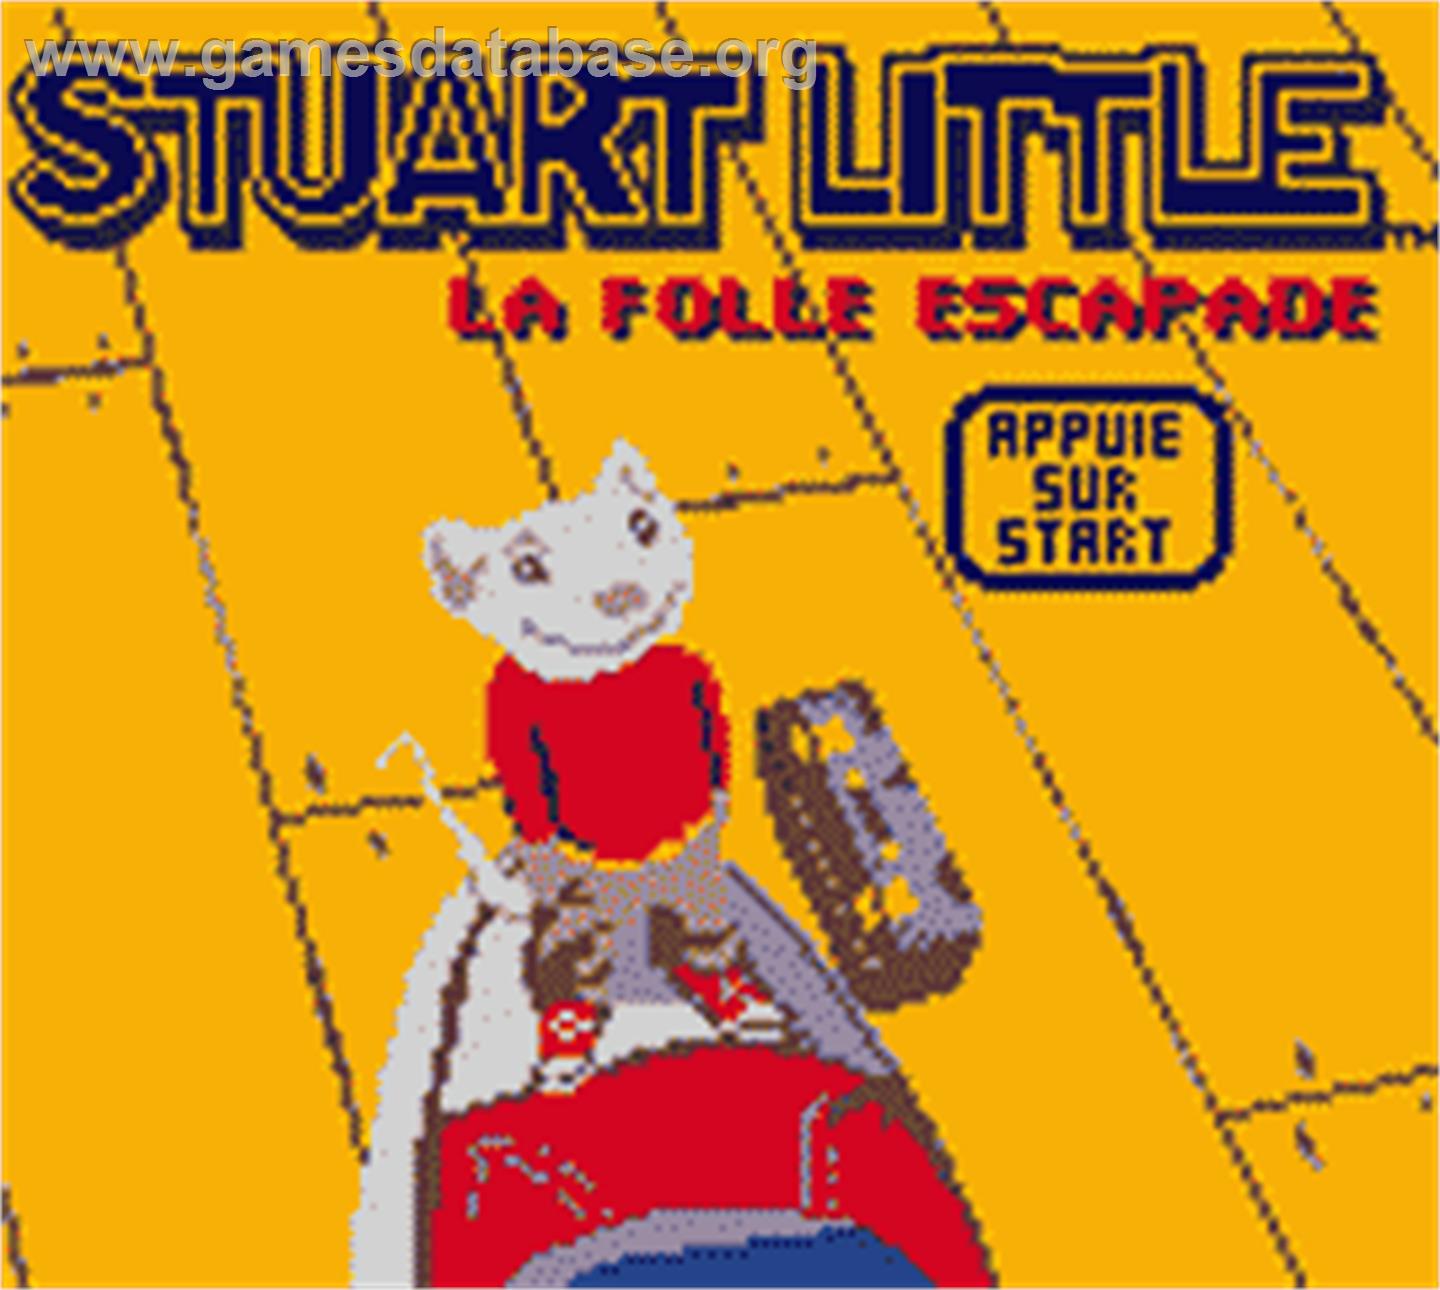 Stuart Little: The Journey Home - Nintendo Game Boy Color - Artwork - Title Screen